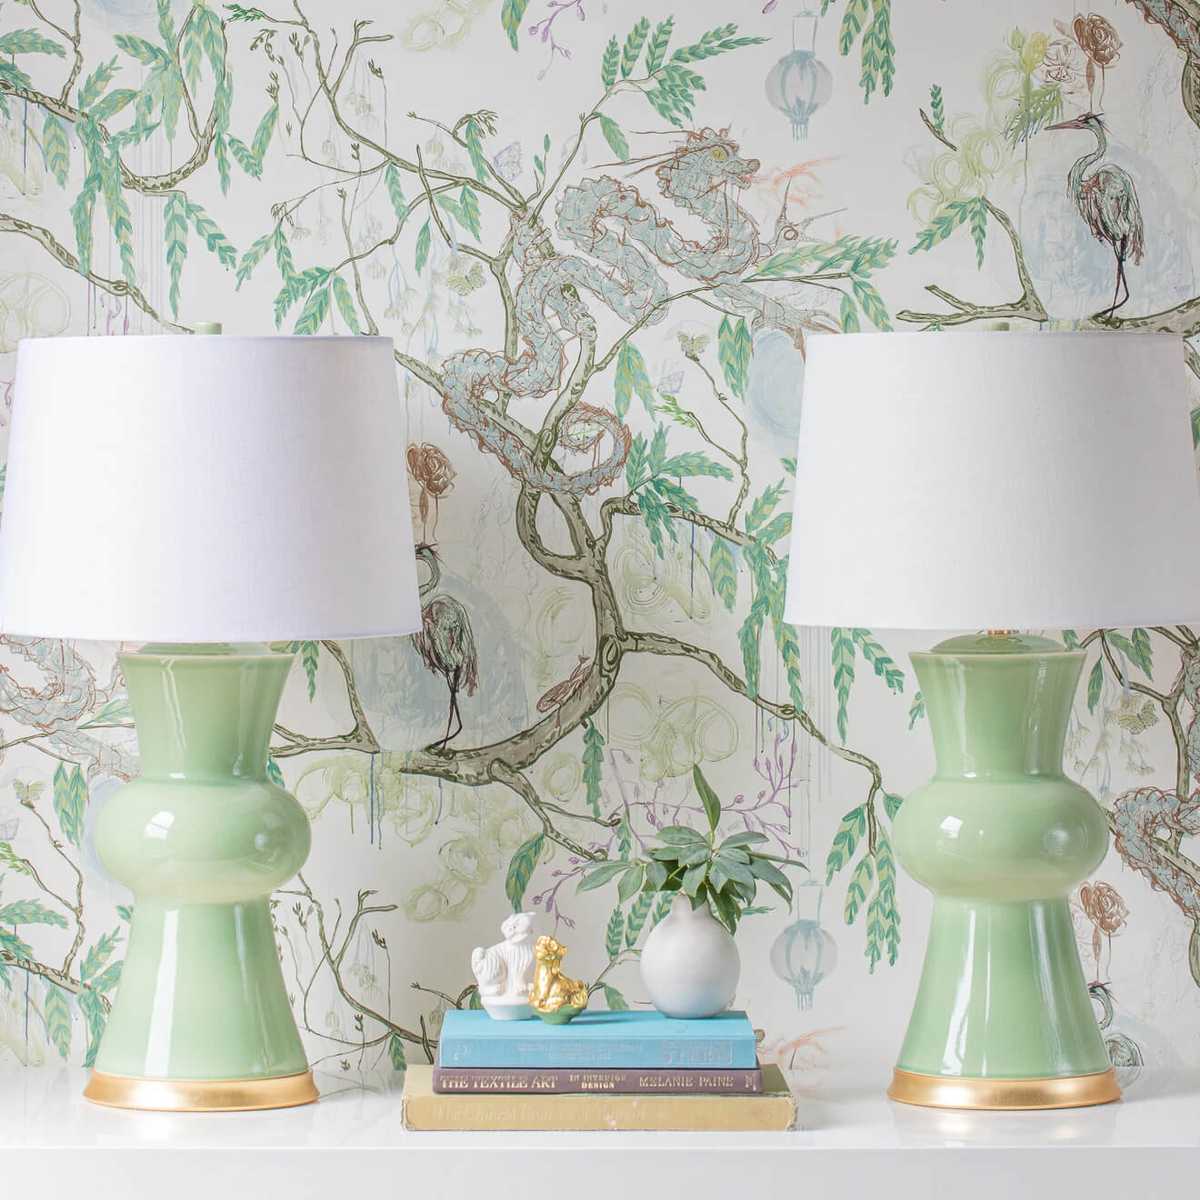 Two pale green Hwang Bishop lamps against printed green wallpaper